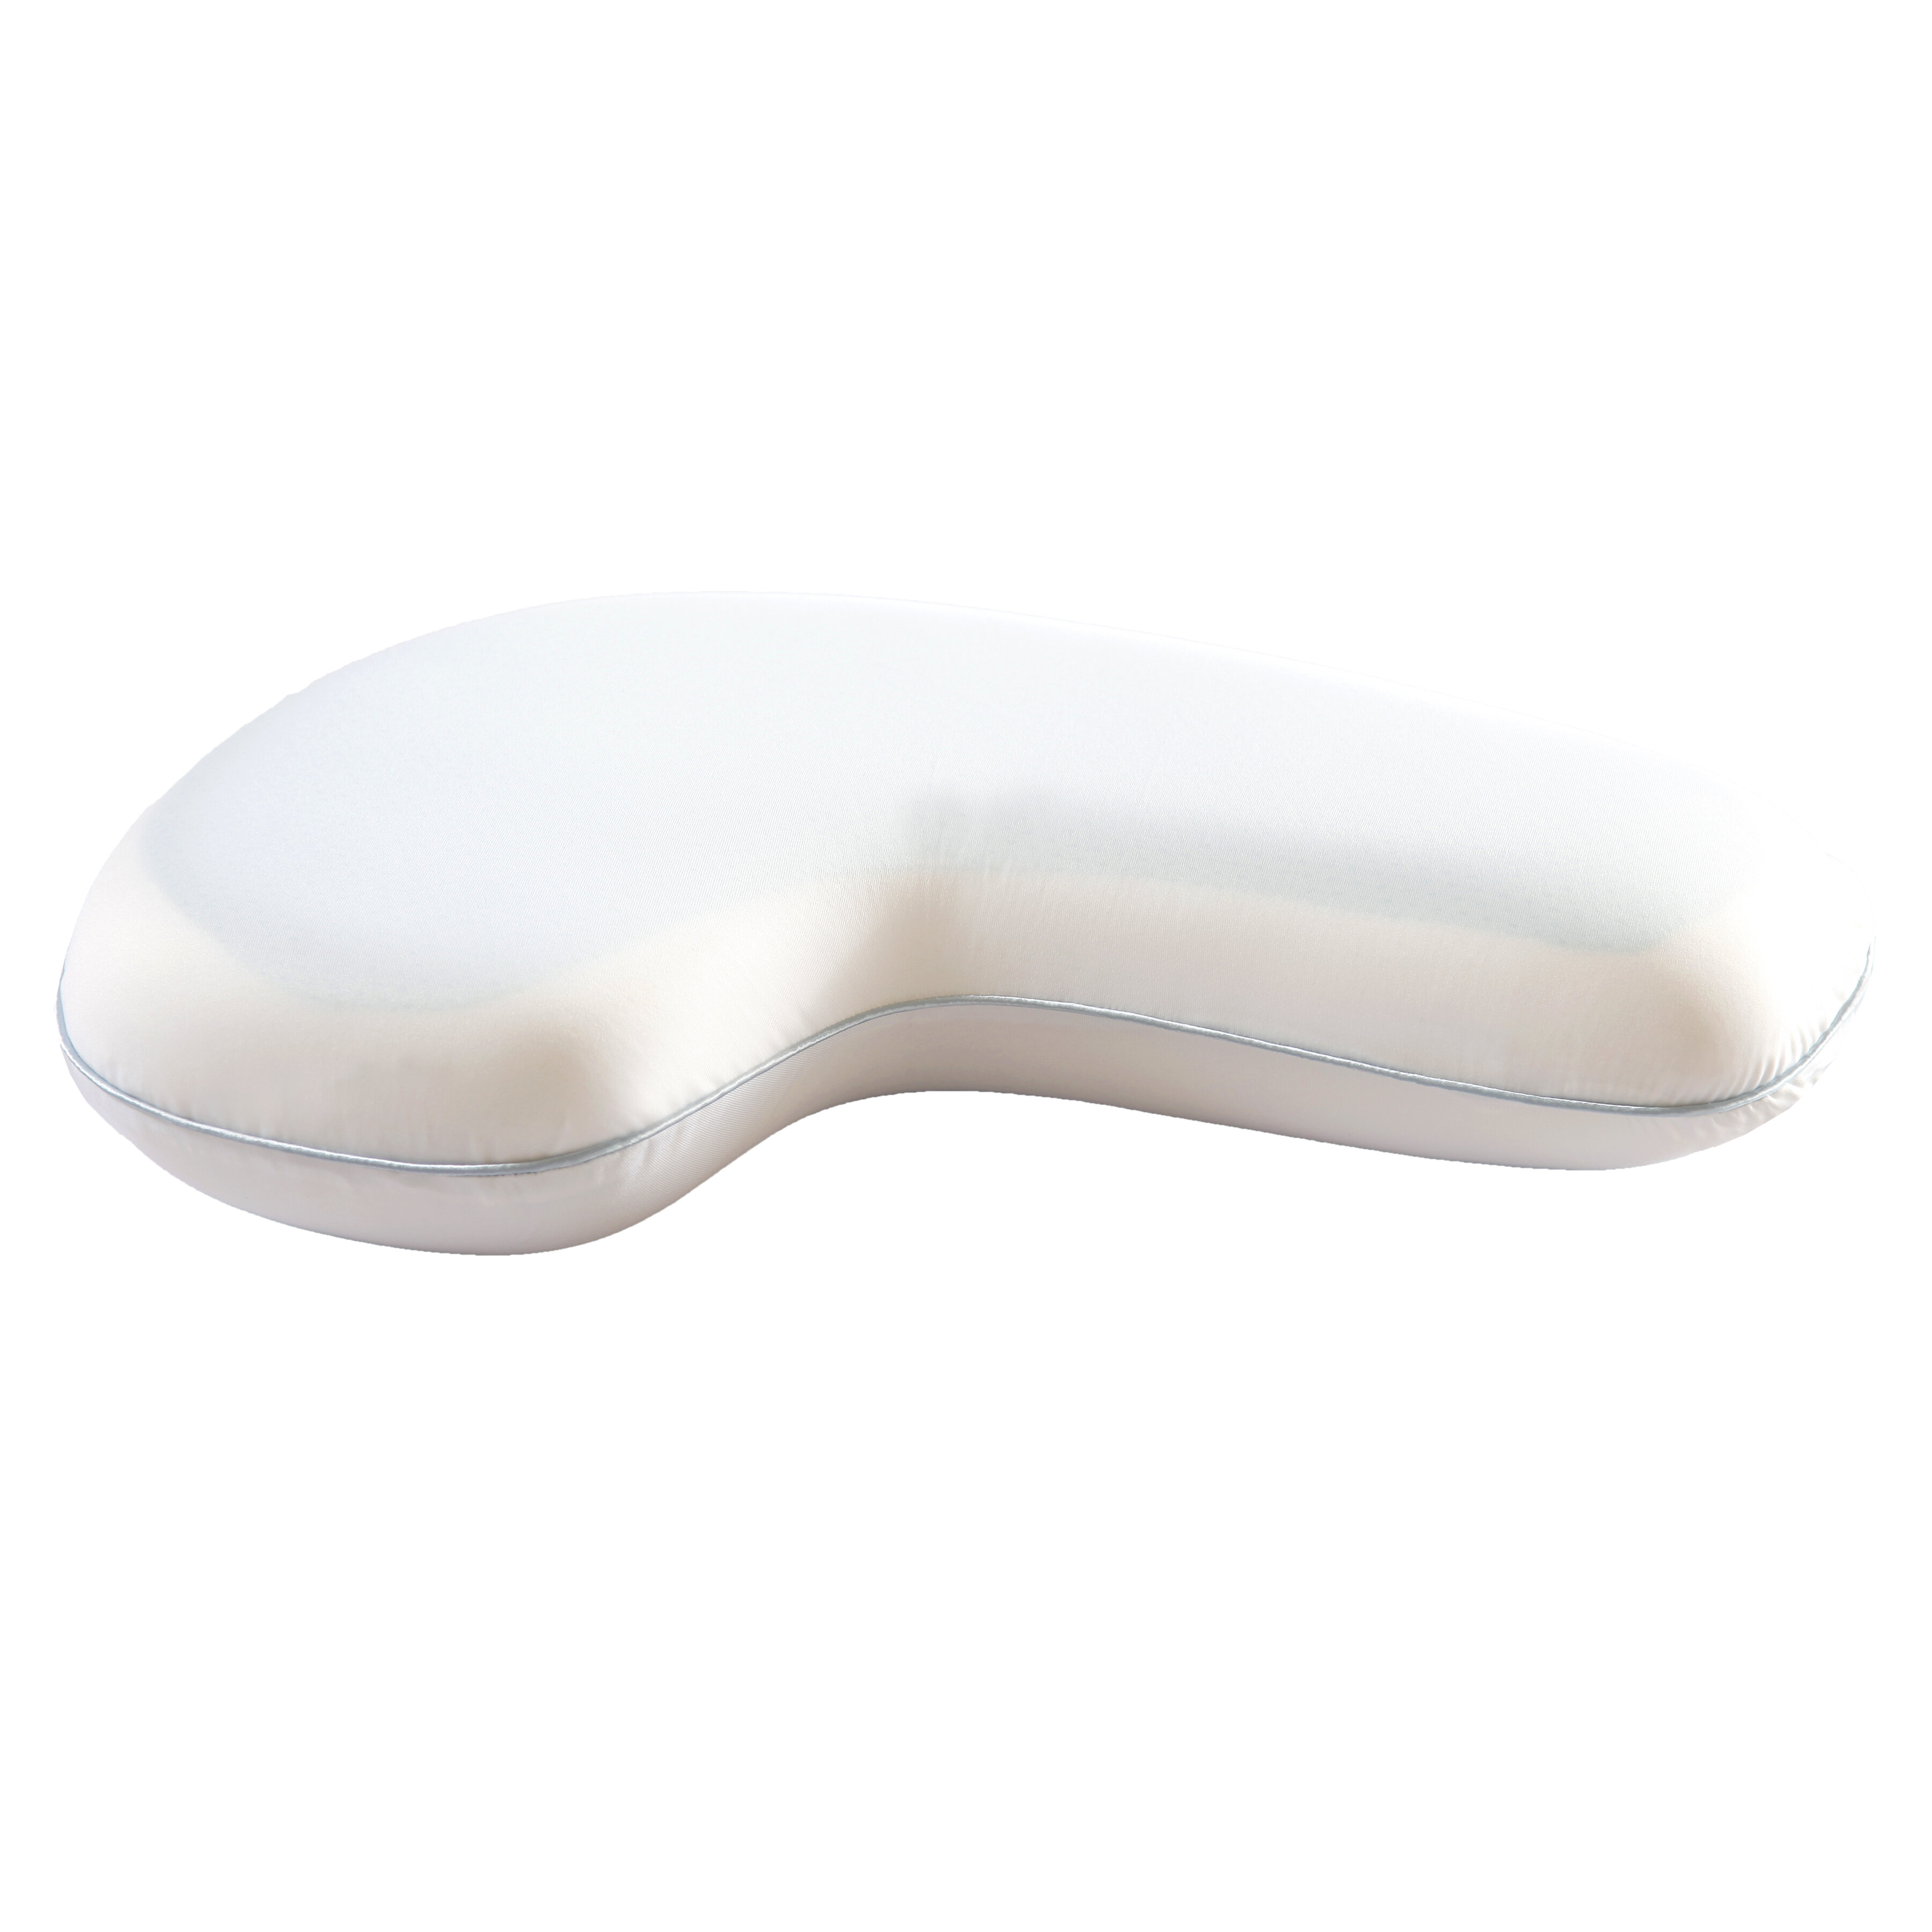 sharper image memory foam pillow with cool gel reviews